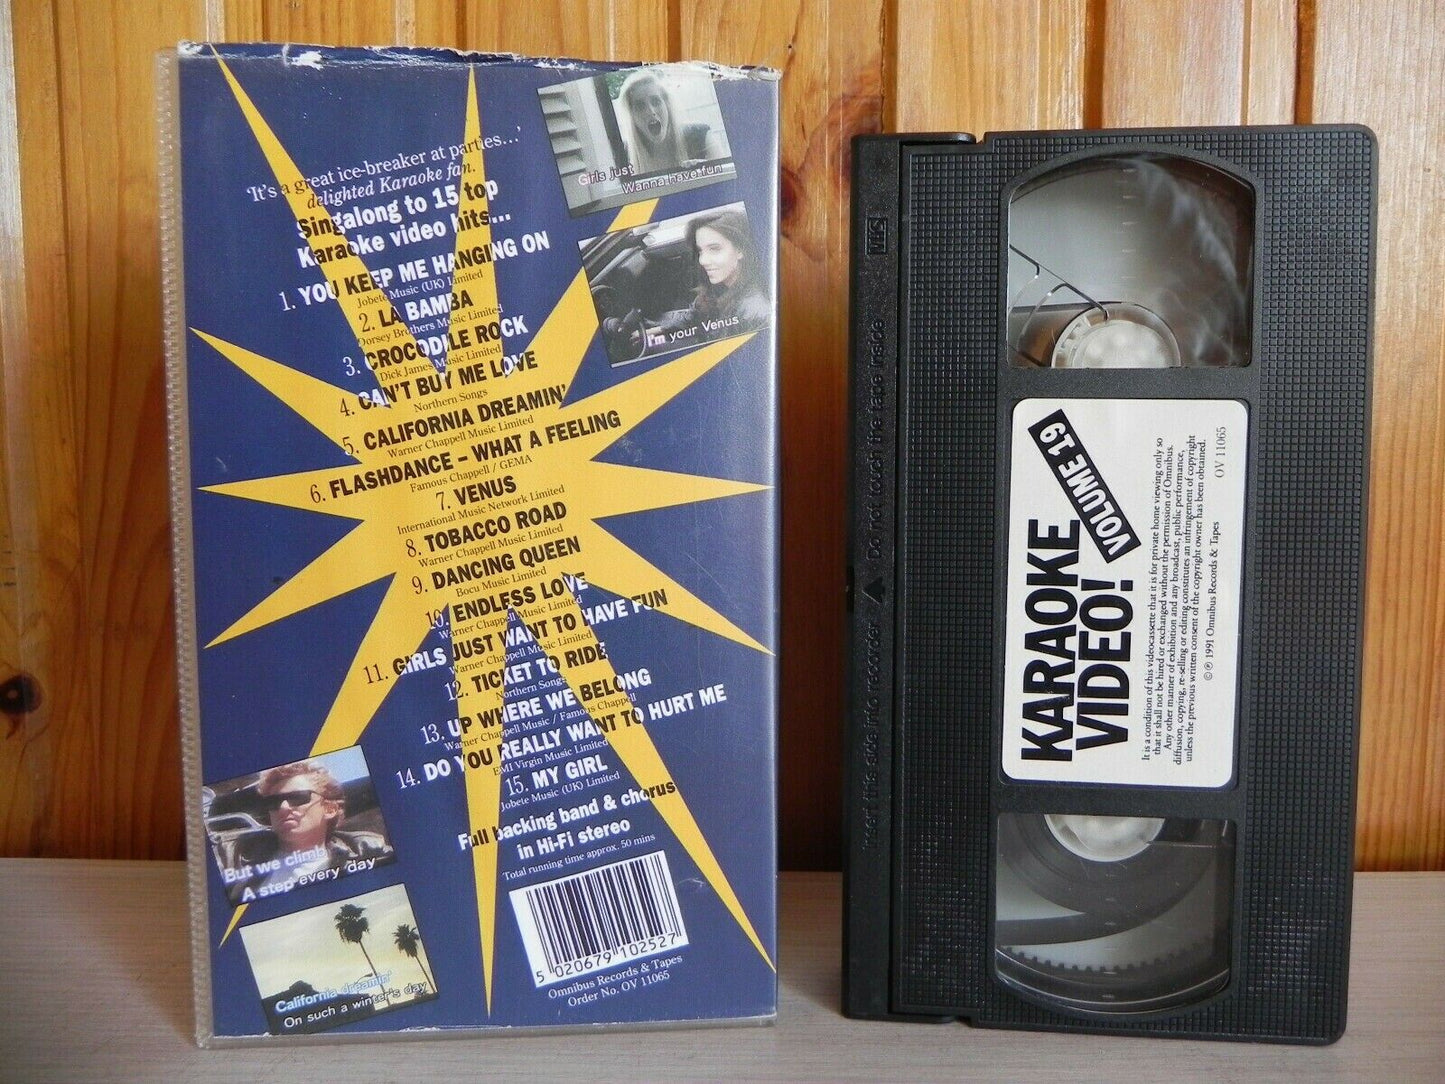 Karaoke Video! - Pop Hits 1 - Now, Karaoke Video Fun For Everyone - Music - VHS-